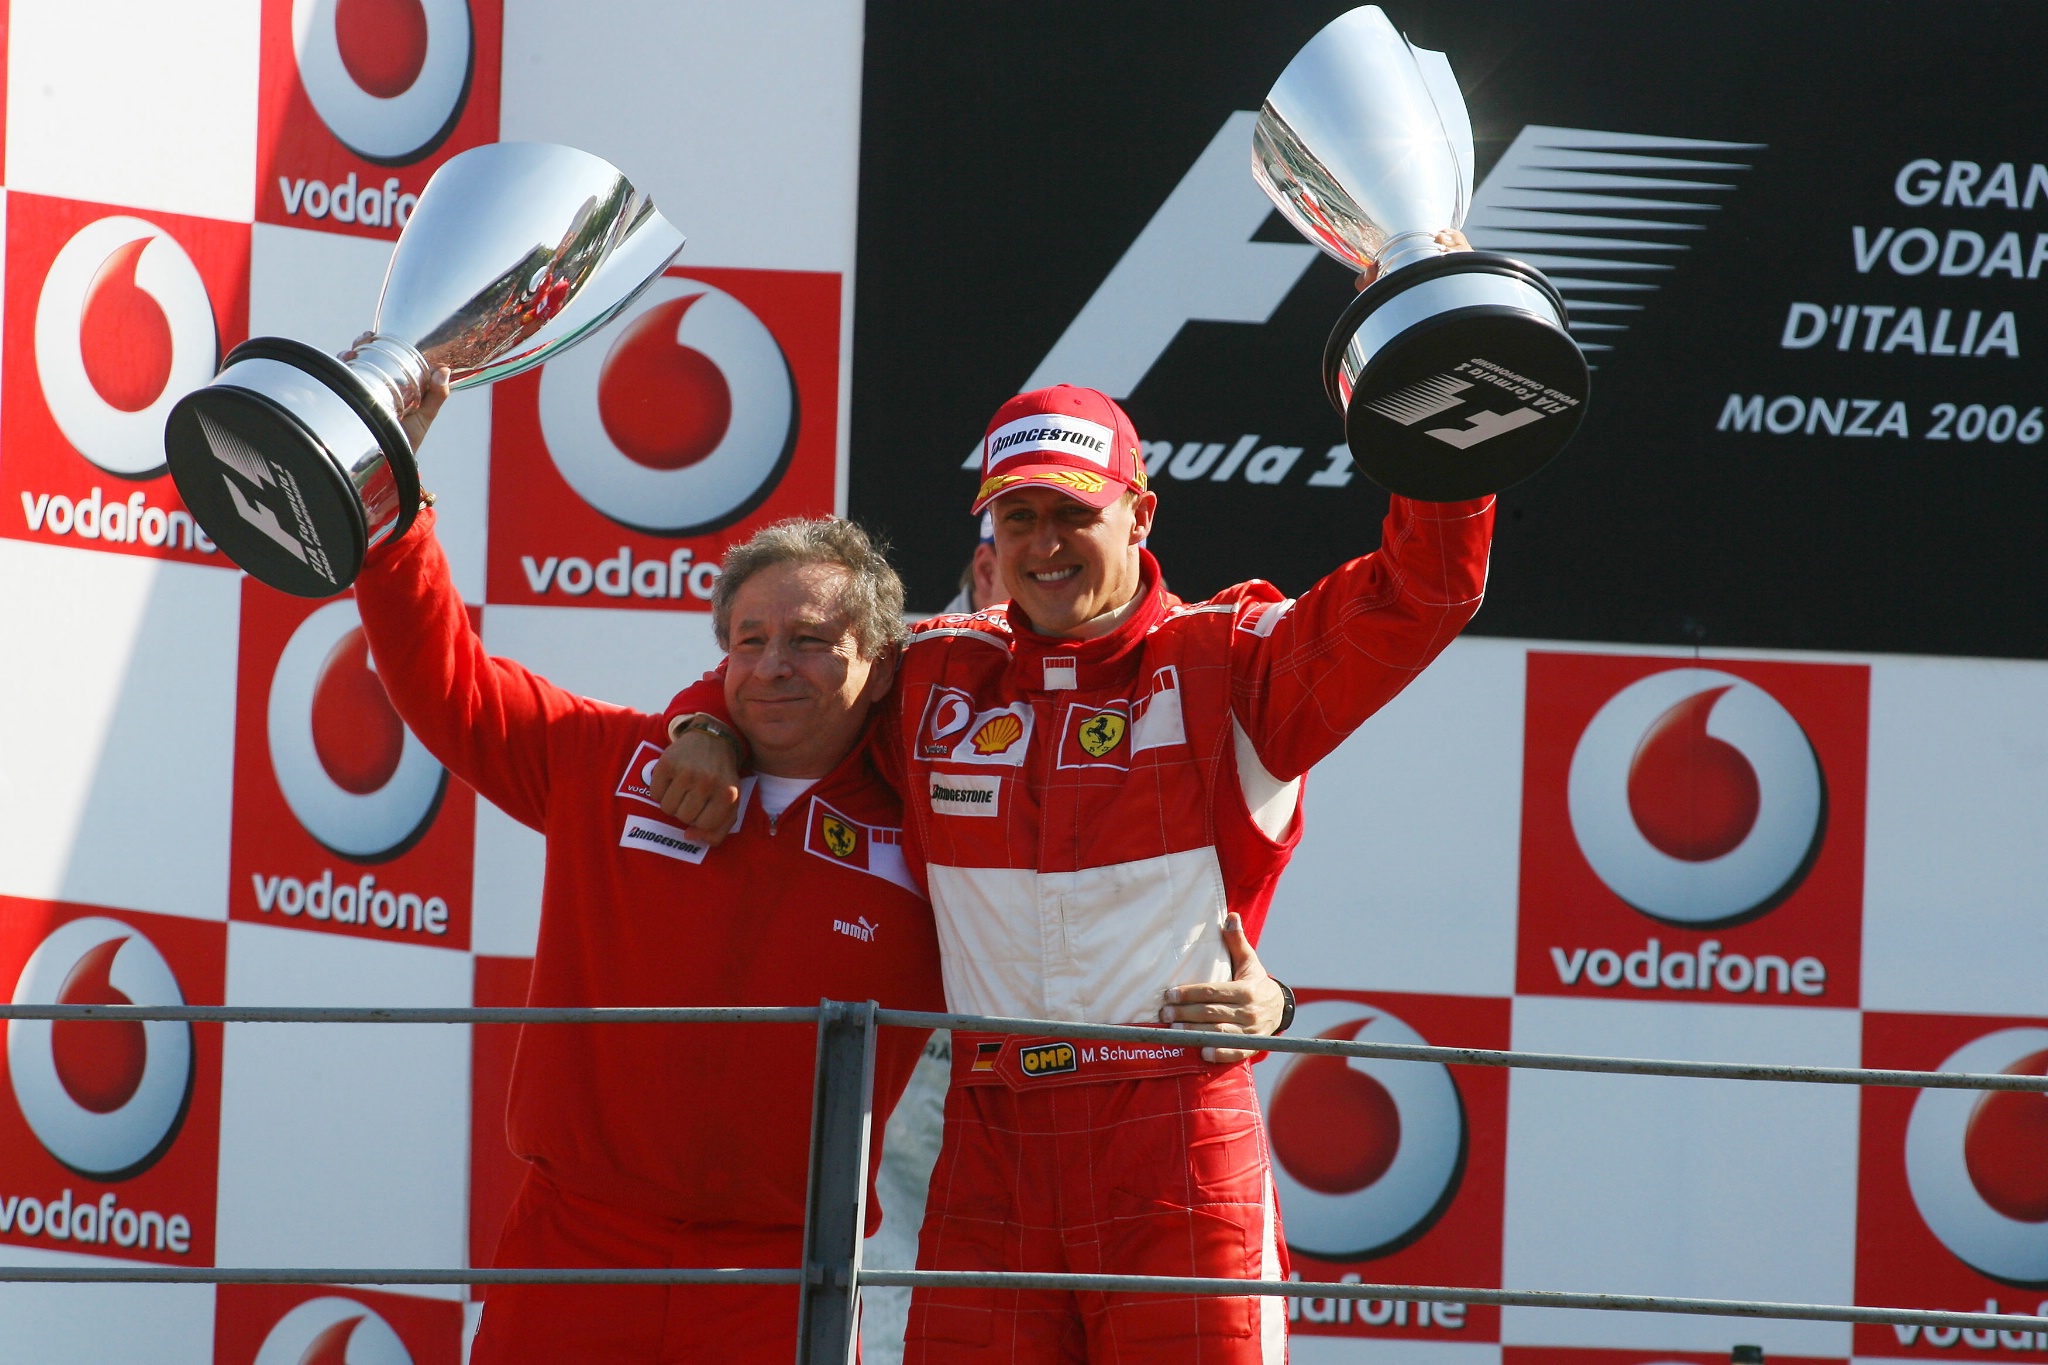  Monza, Italy, Michael Schumacher (GER), Scuderia Ferrari and Jean Todt (FRA), Scuderia Ferrari, Teamchief, General